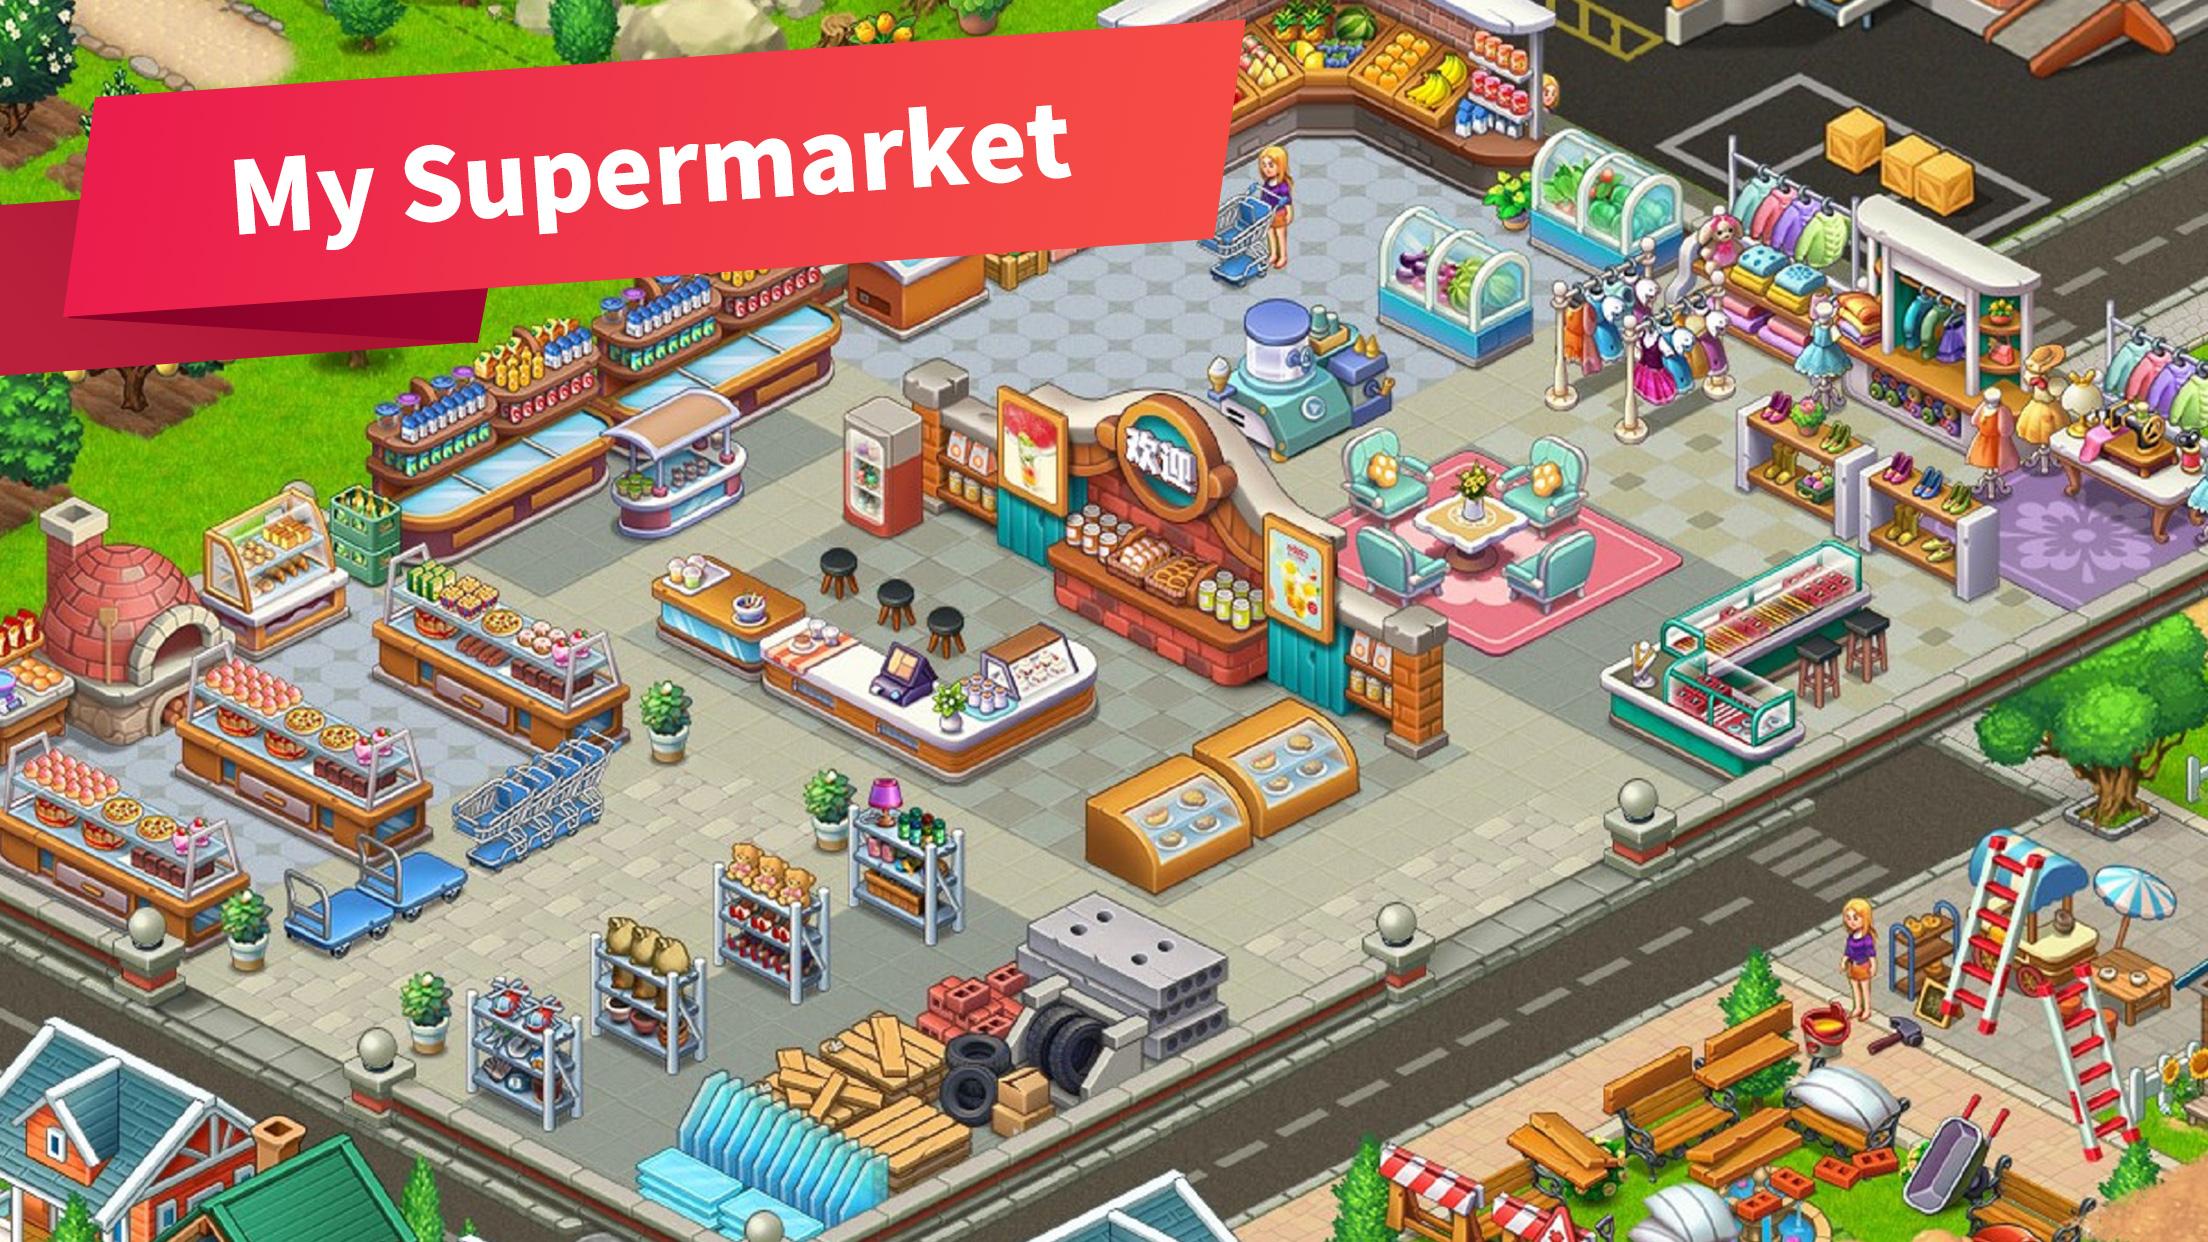 Supermarket simulator cheat engine. Супермаркет Tycoon. Мой супермаркет игра. Супермаркет симулятор с улицы. Супермаркет симулятор мир.